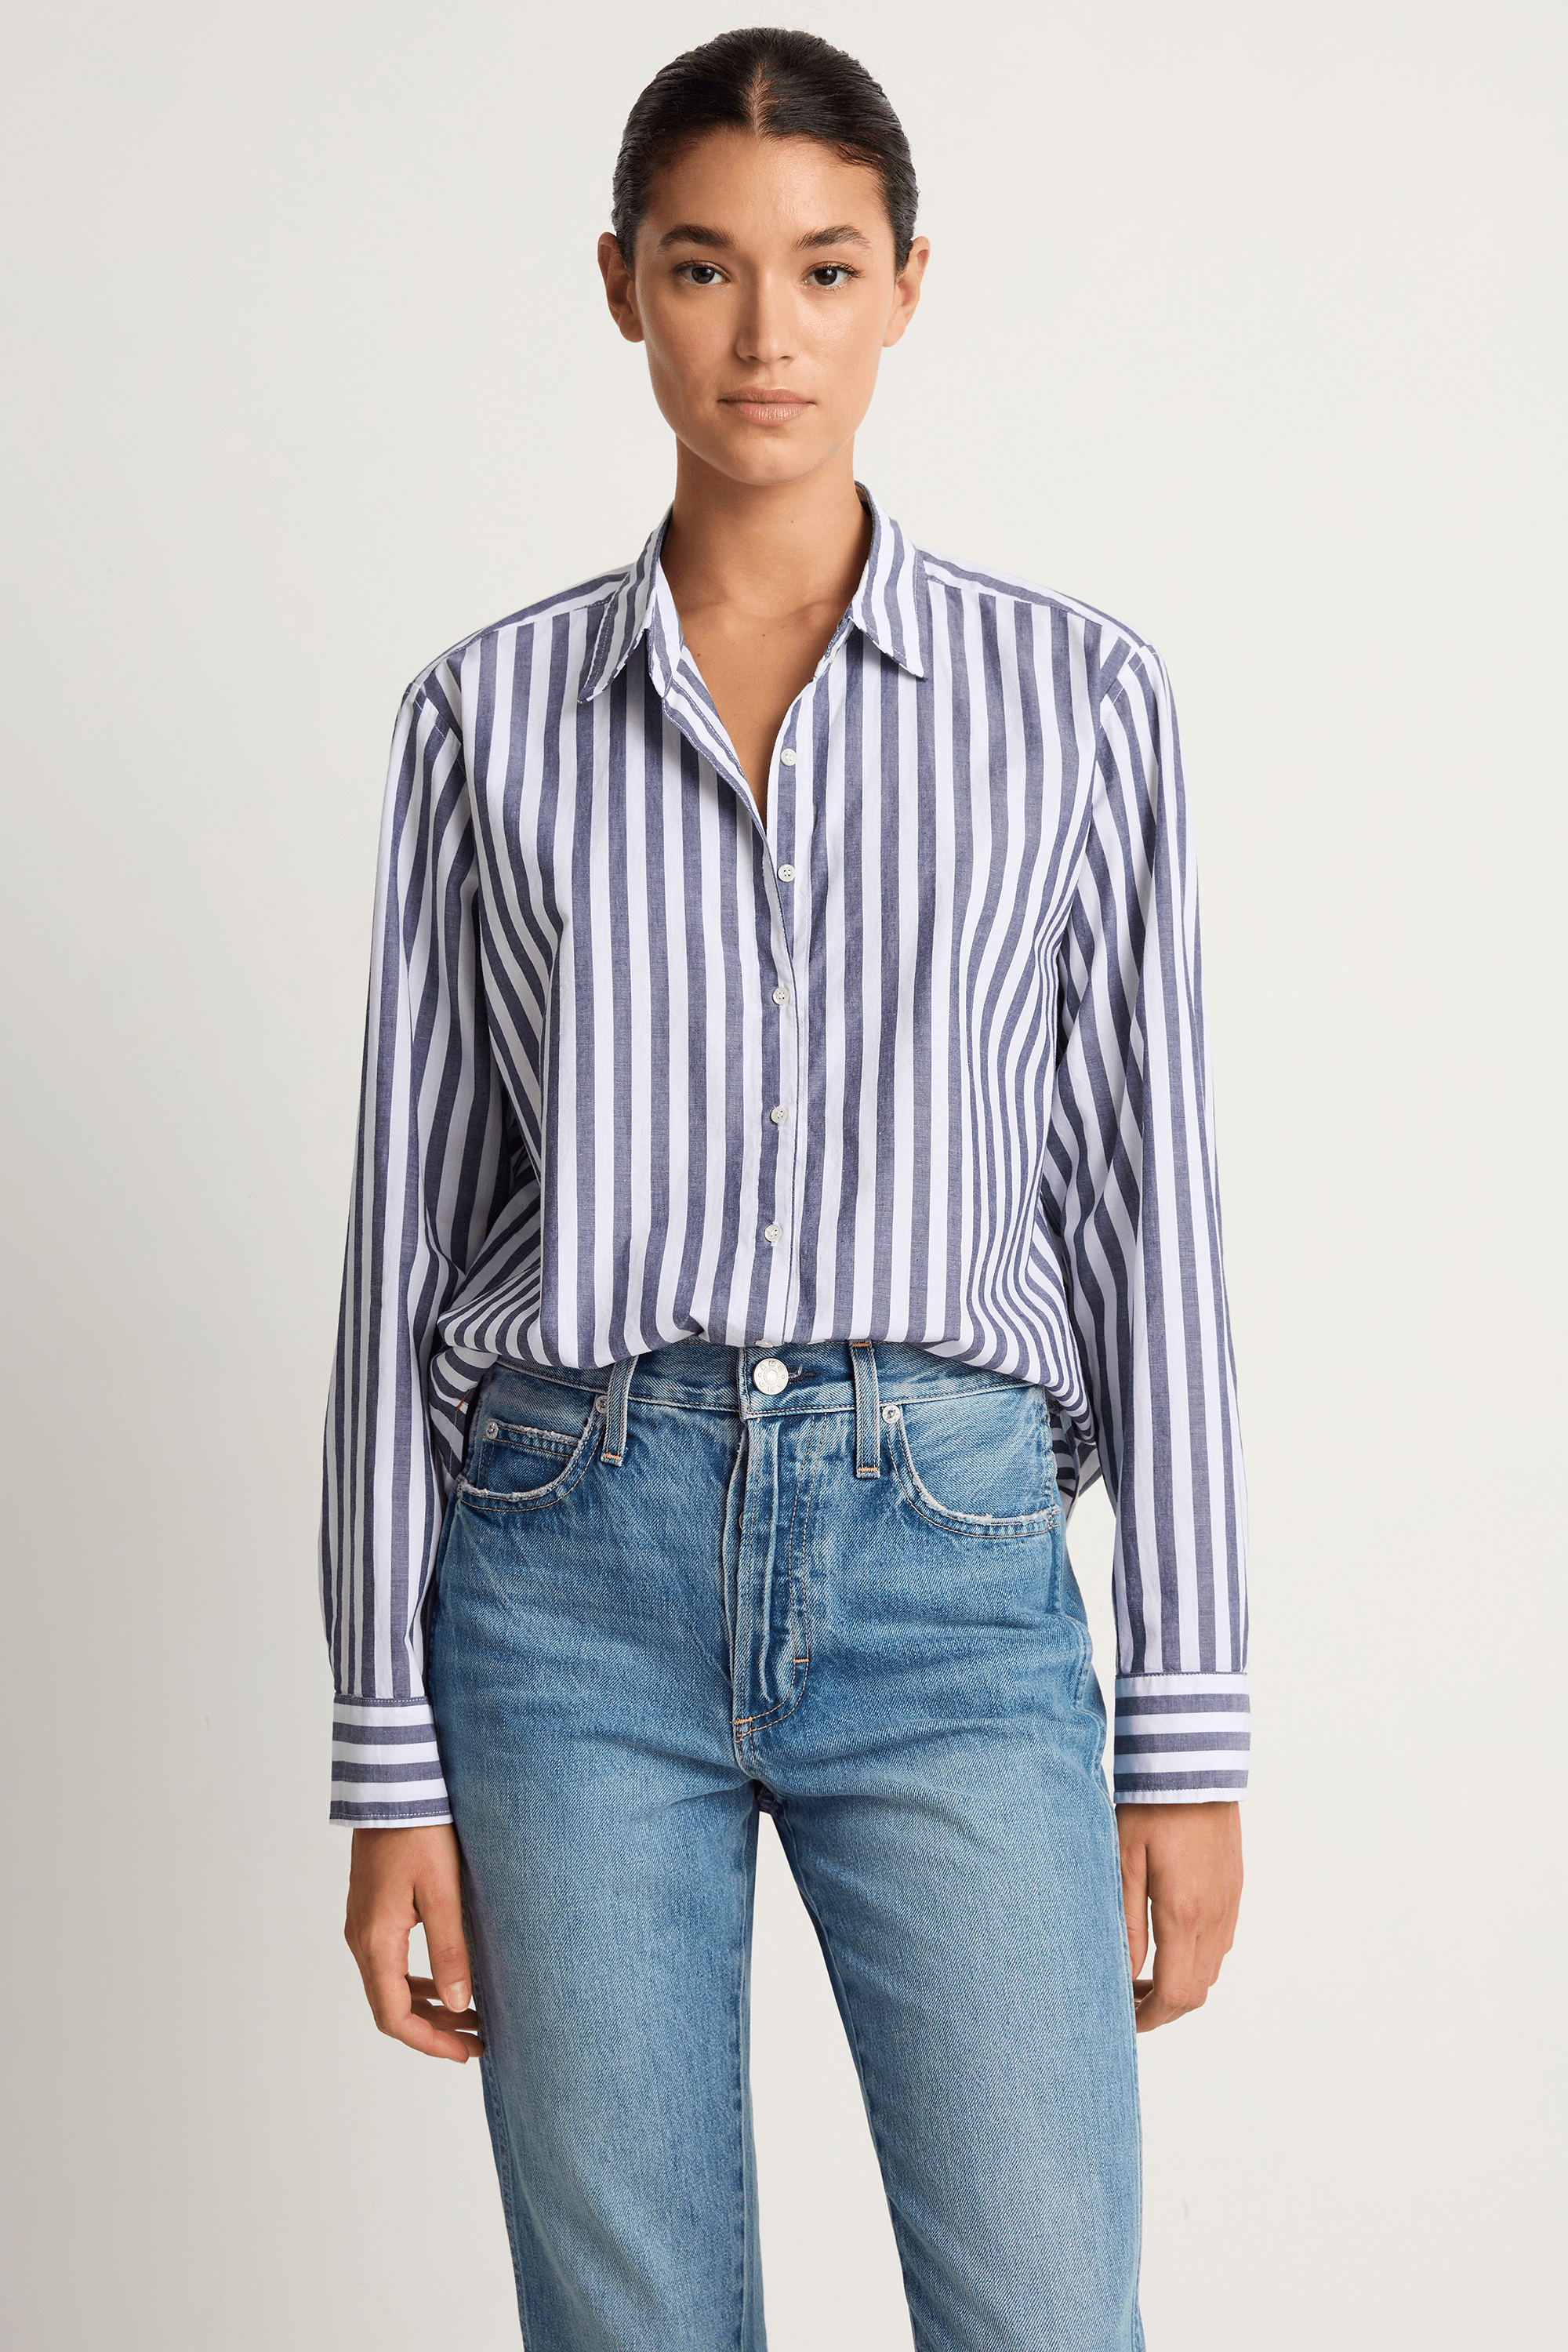 Xirena Beau Shirt - Twilight Stripe